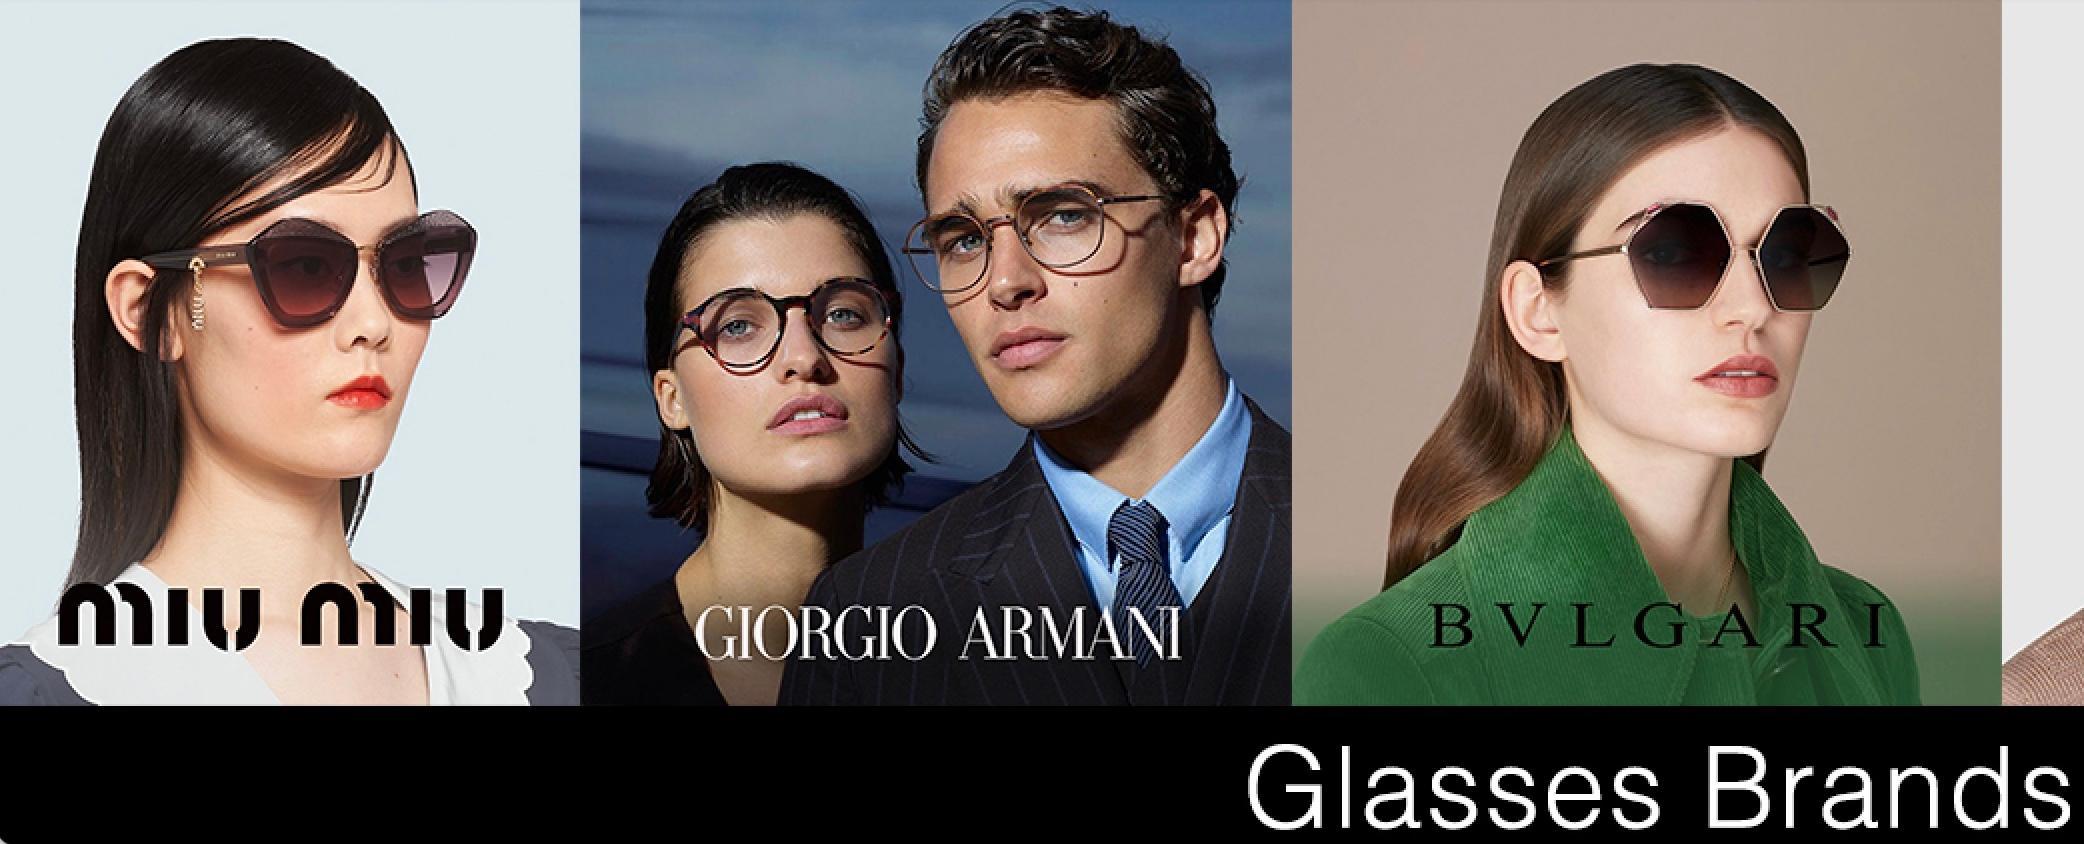 New Unique Brand Design Sunglasses Women Oversized Square Sun Glasses Men  Fashion Wrap Around Sunnies Shield Candy Eyewear - Sunglasses - AliExpress